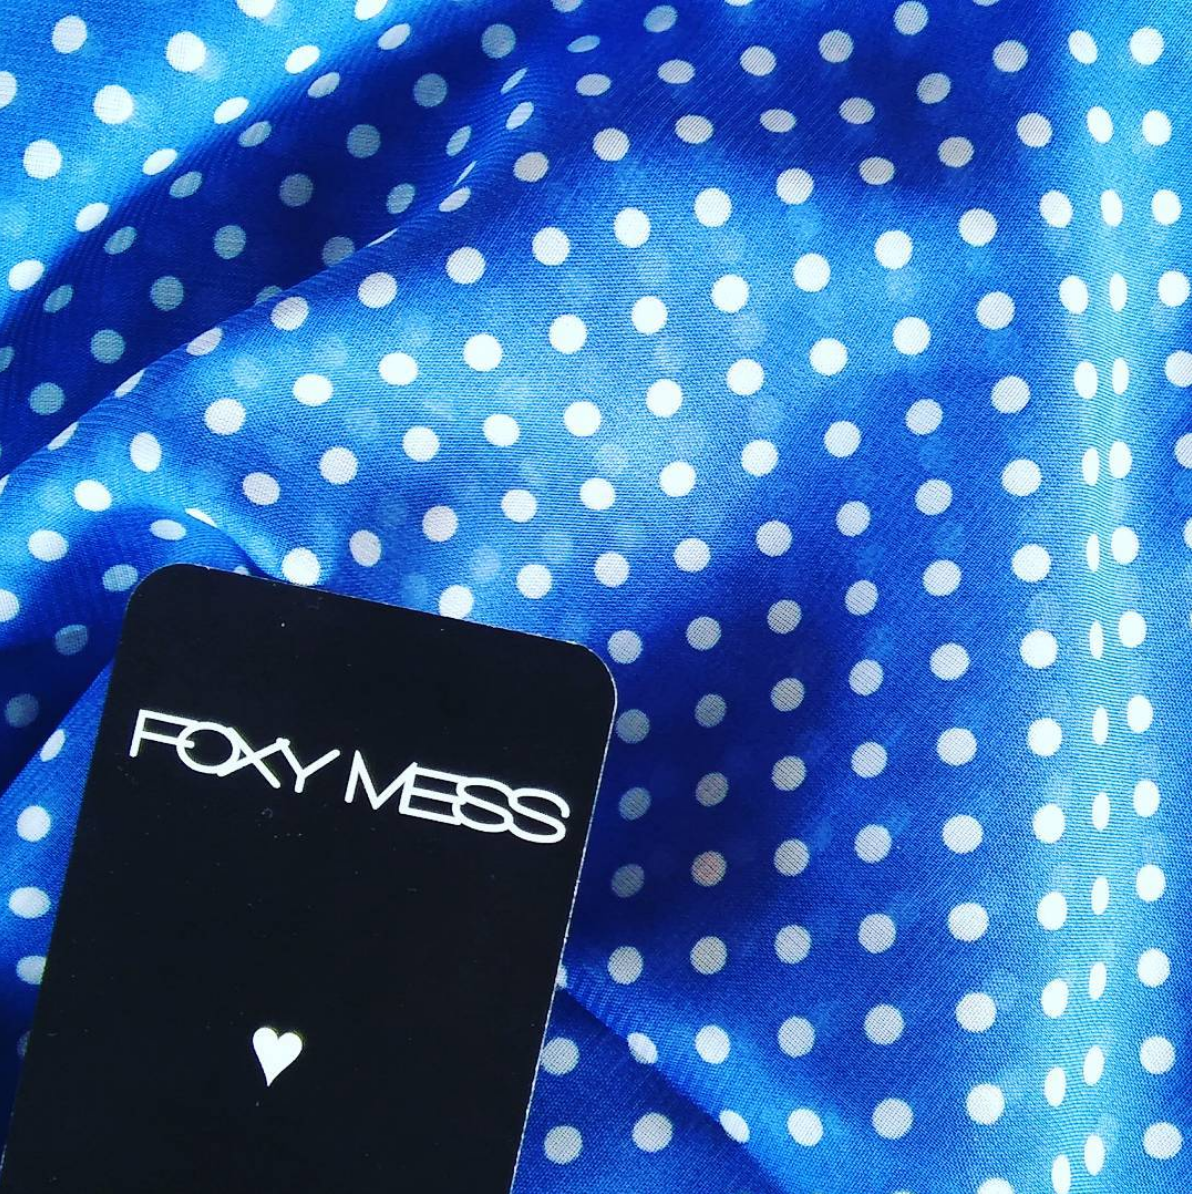 Foxy Mess branding